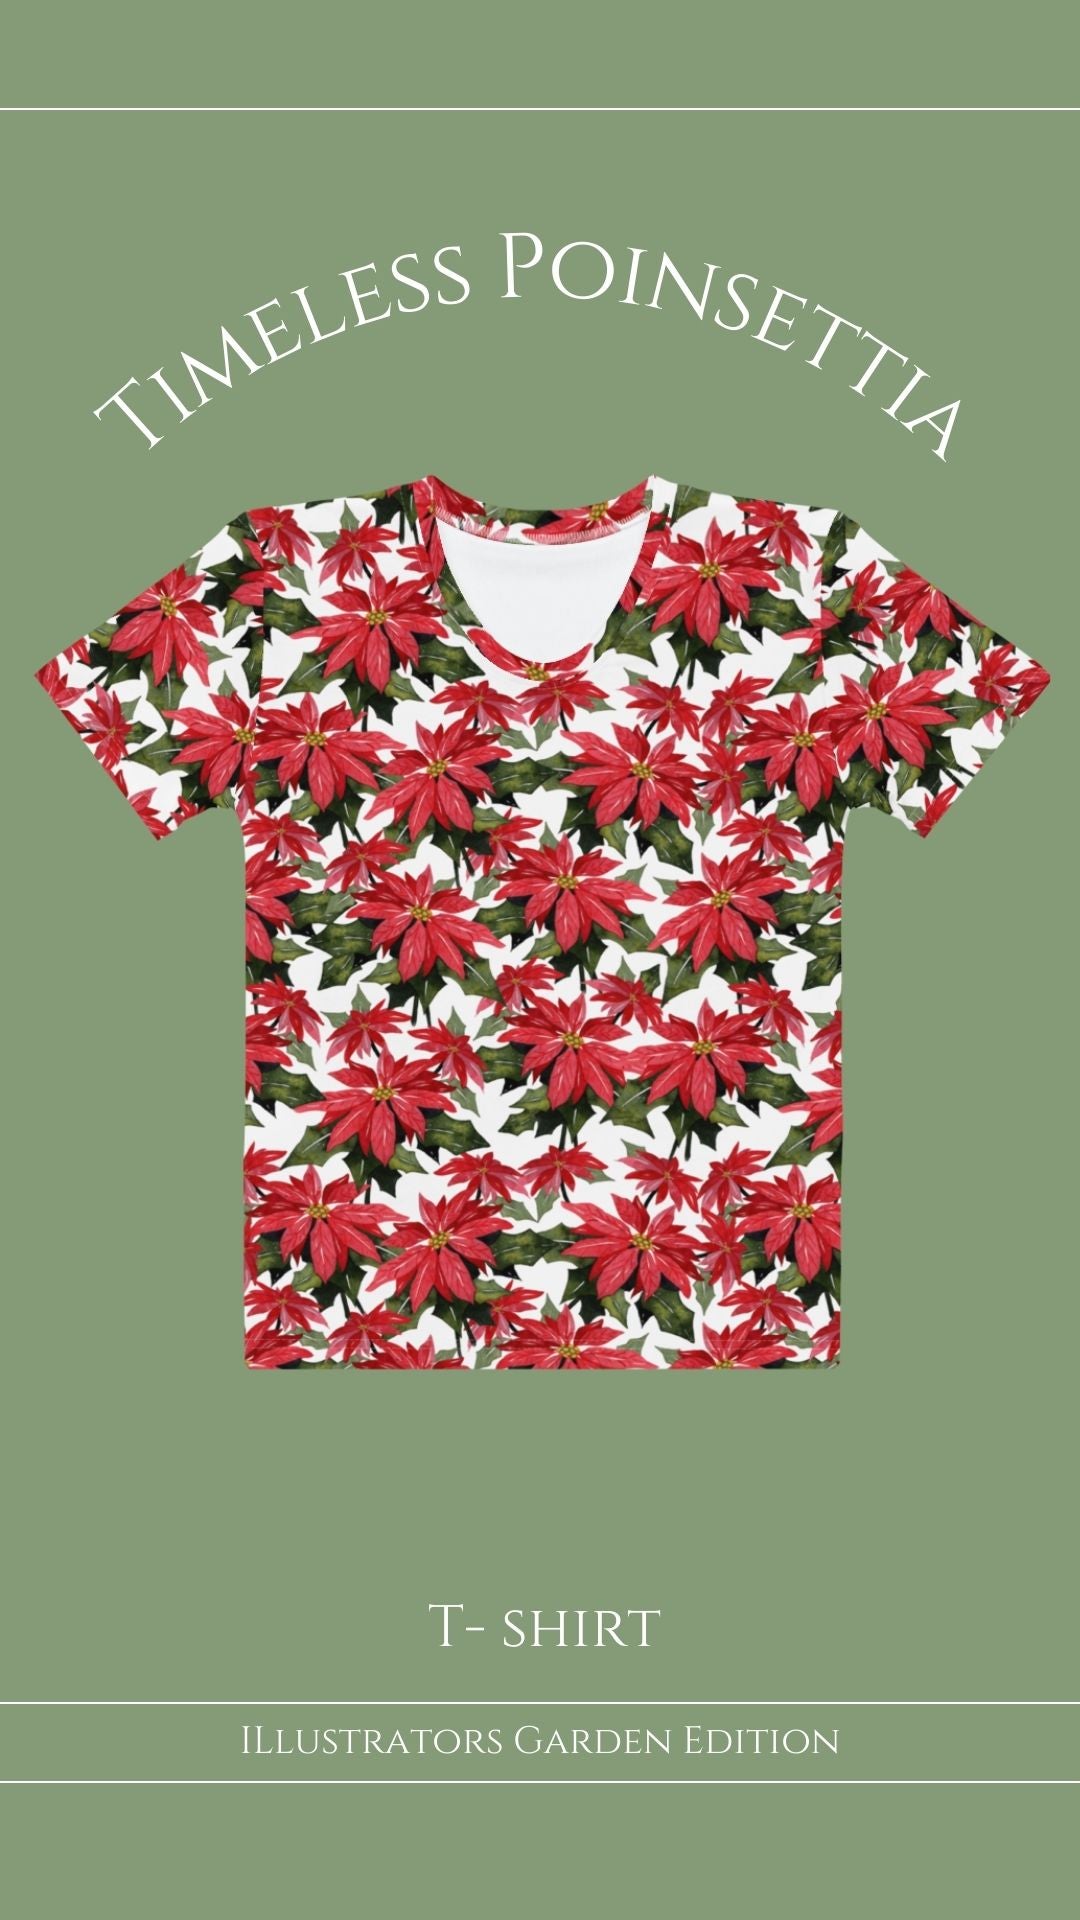 Timeless Poinsettia T-shirt